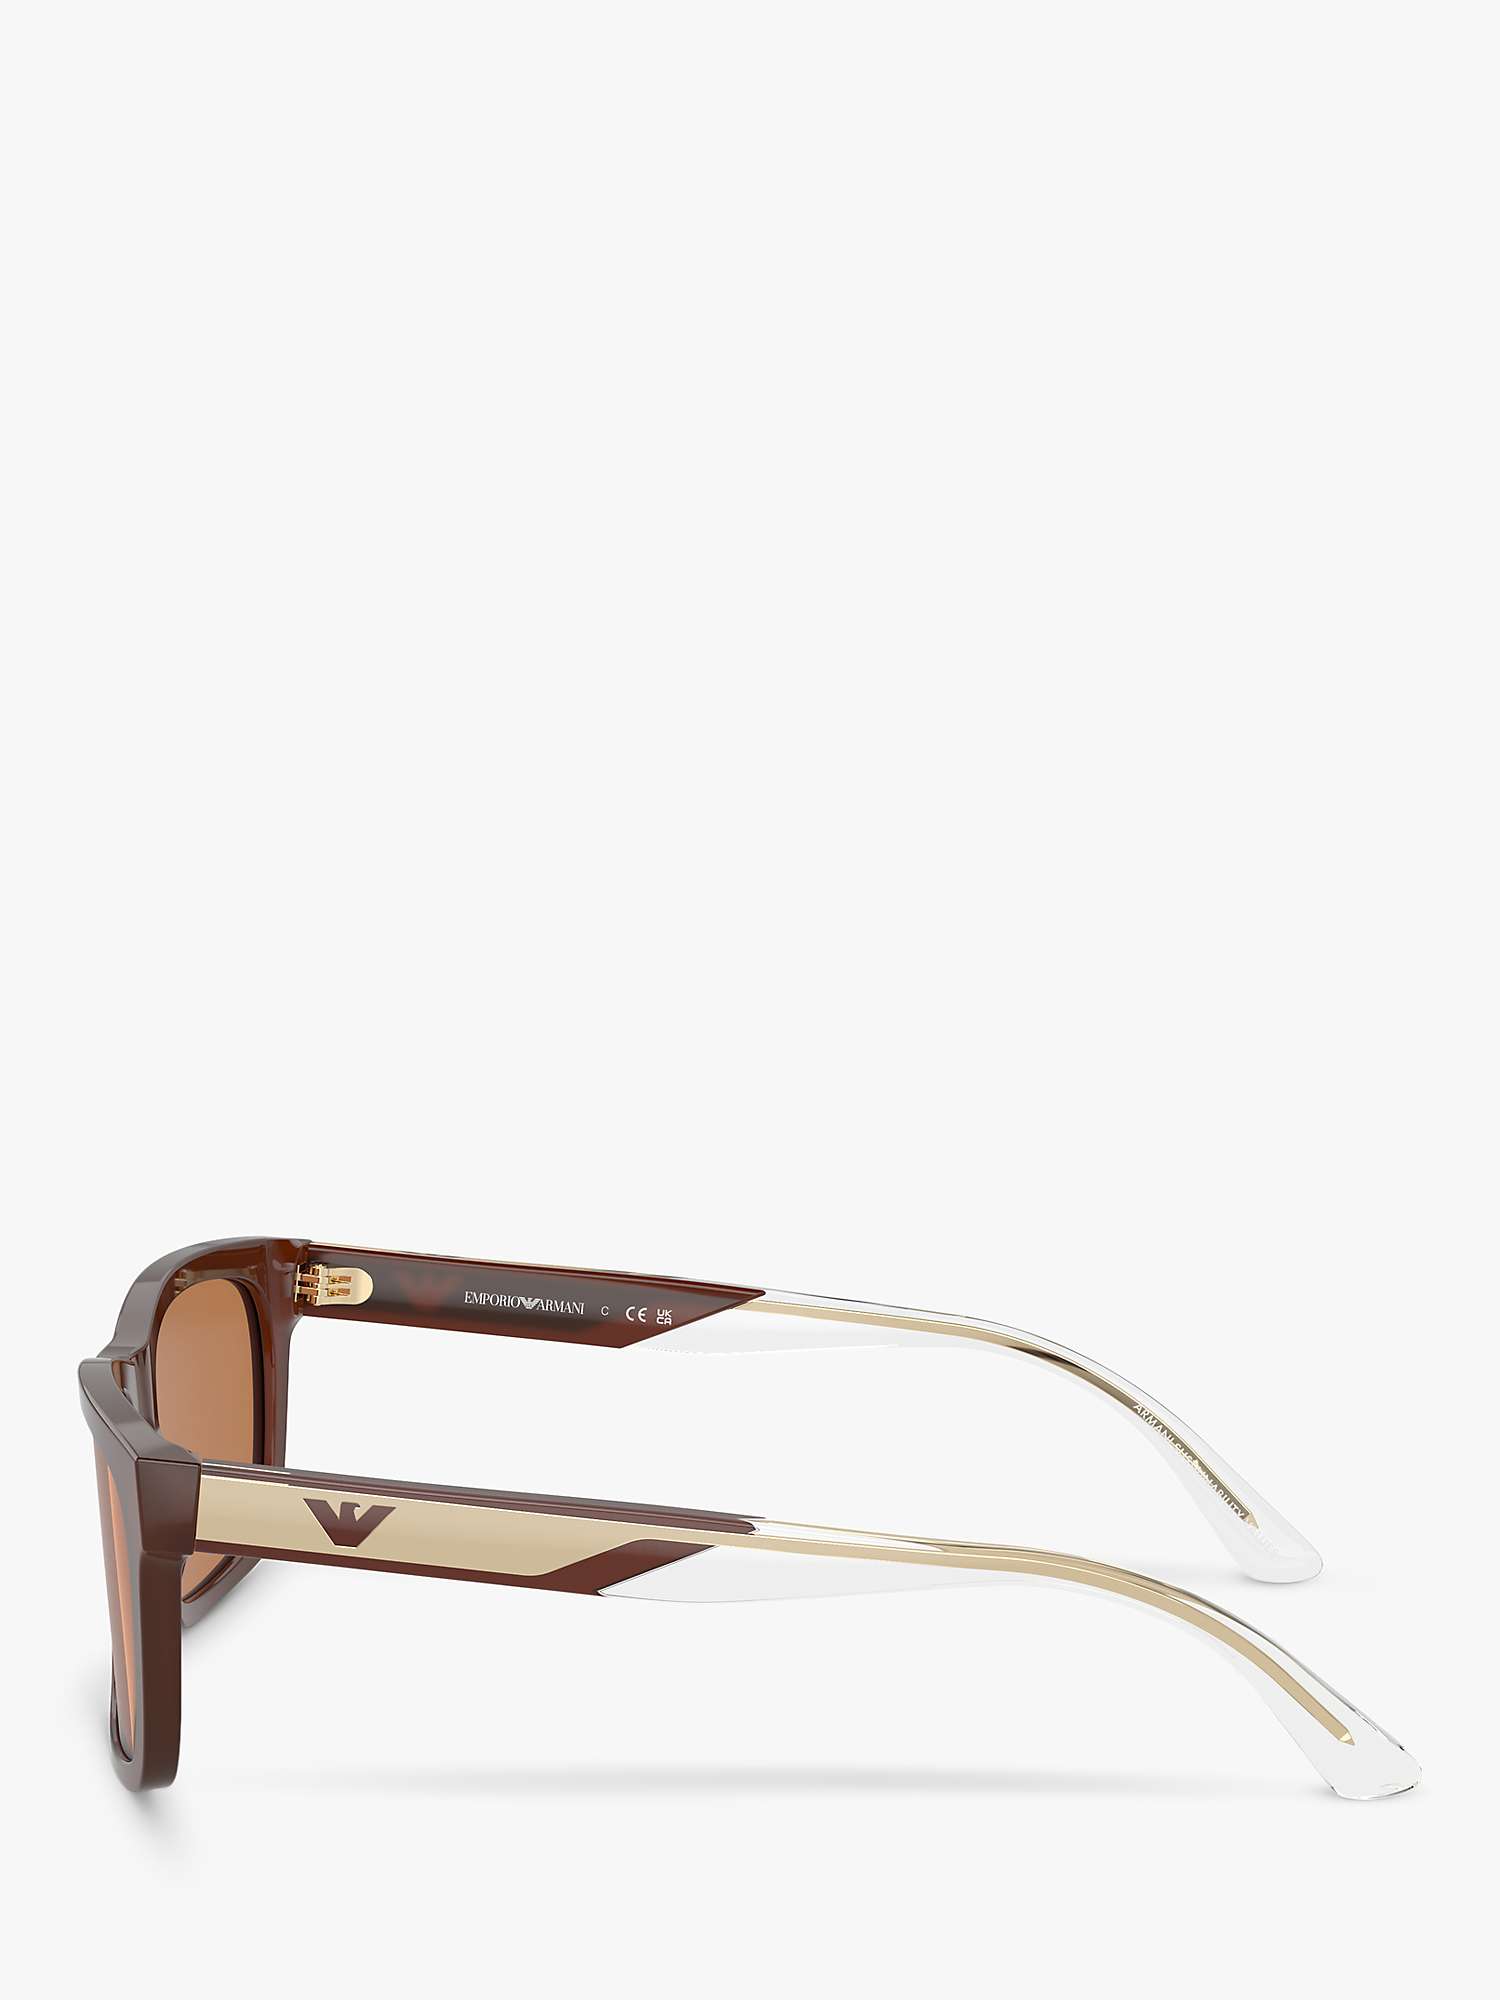 Buy Emporio Armani EA4224 Men's Rectangular Sunglasses, Shiny Opaline/Brown Online at johnlewis.com